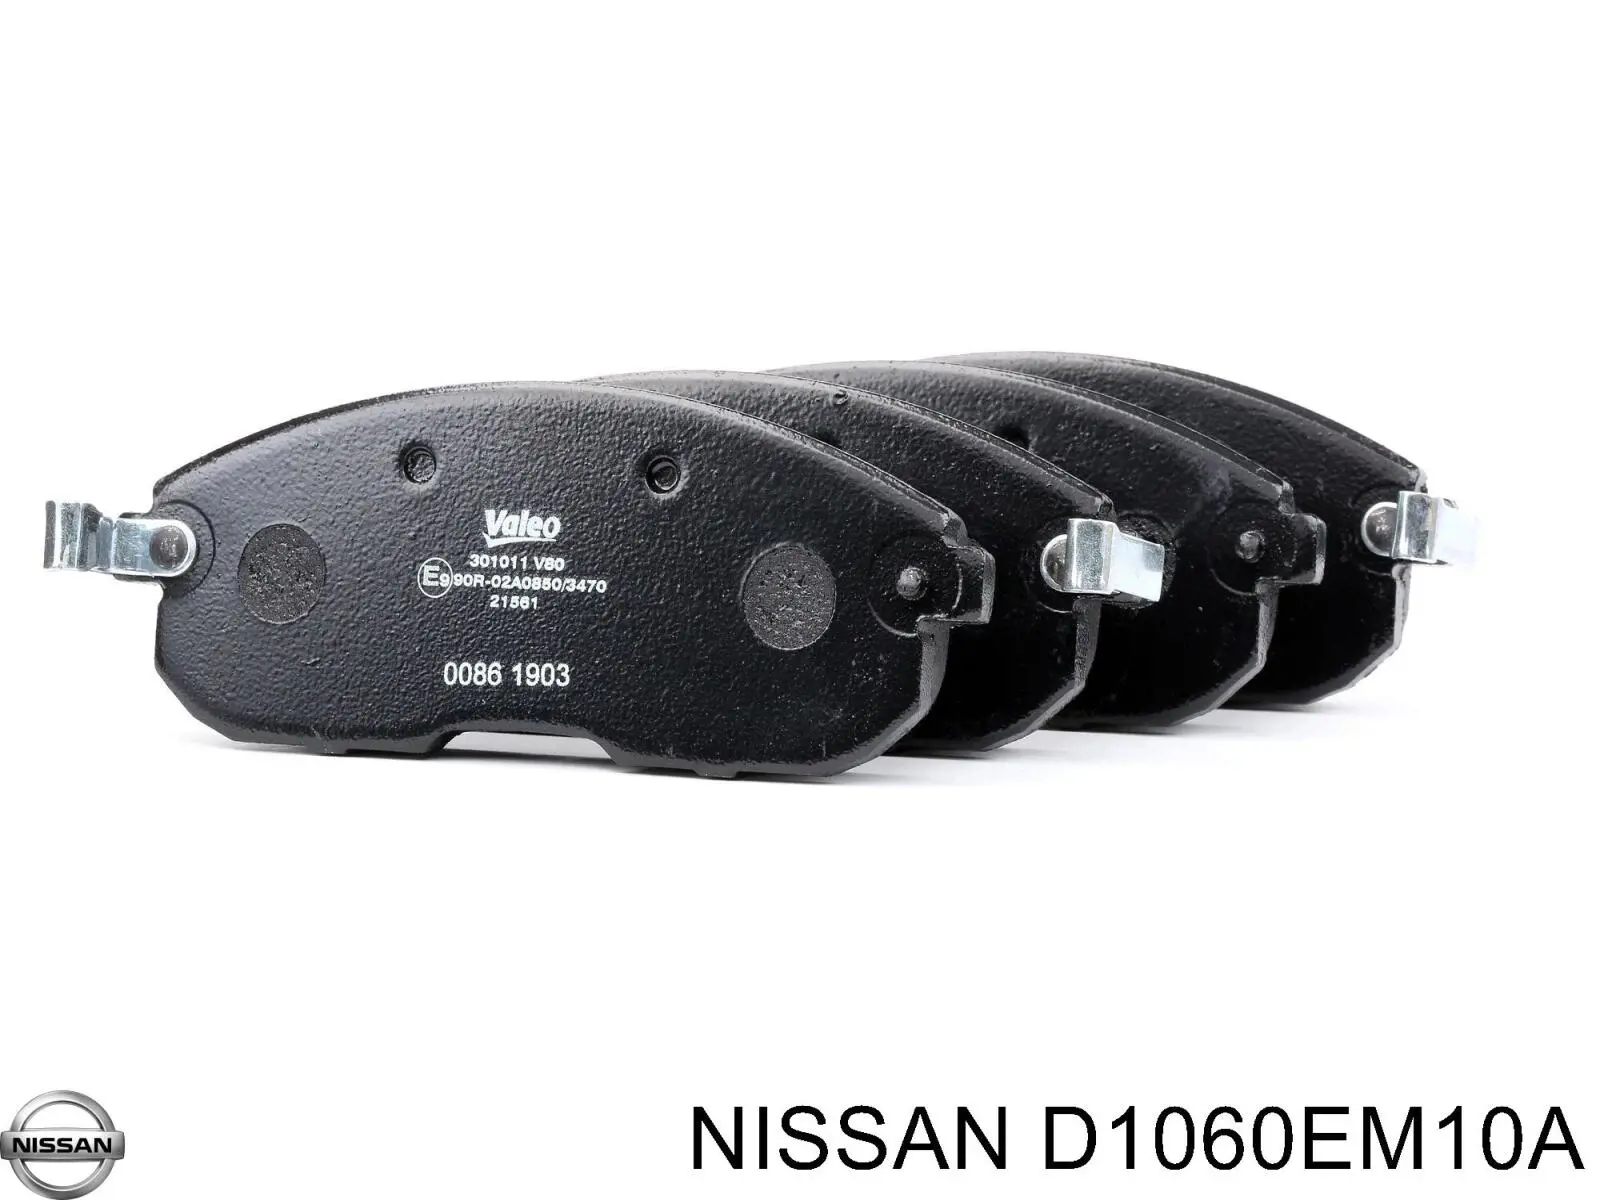 D1060EM10A Nissan pastillas de freno delanteras